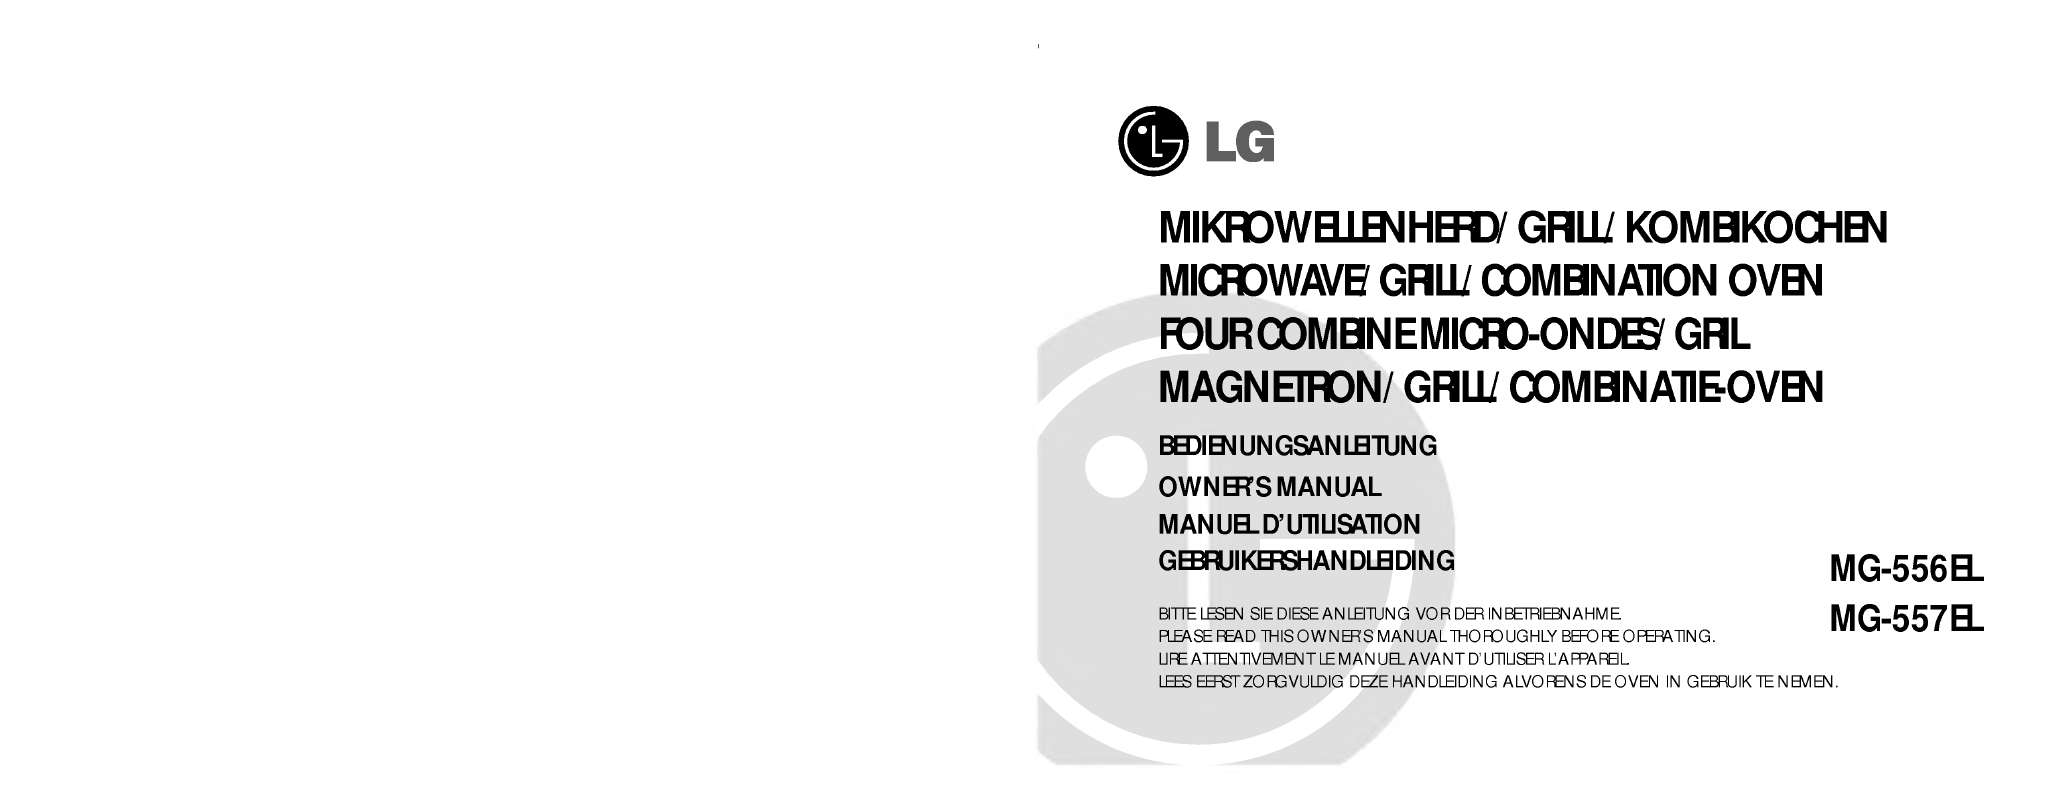 Guide utilisation LG MG-557EJ de la marque LG